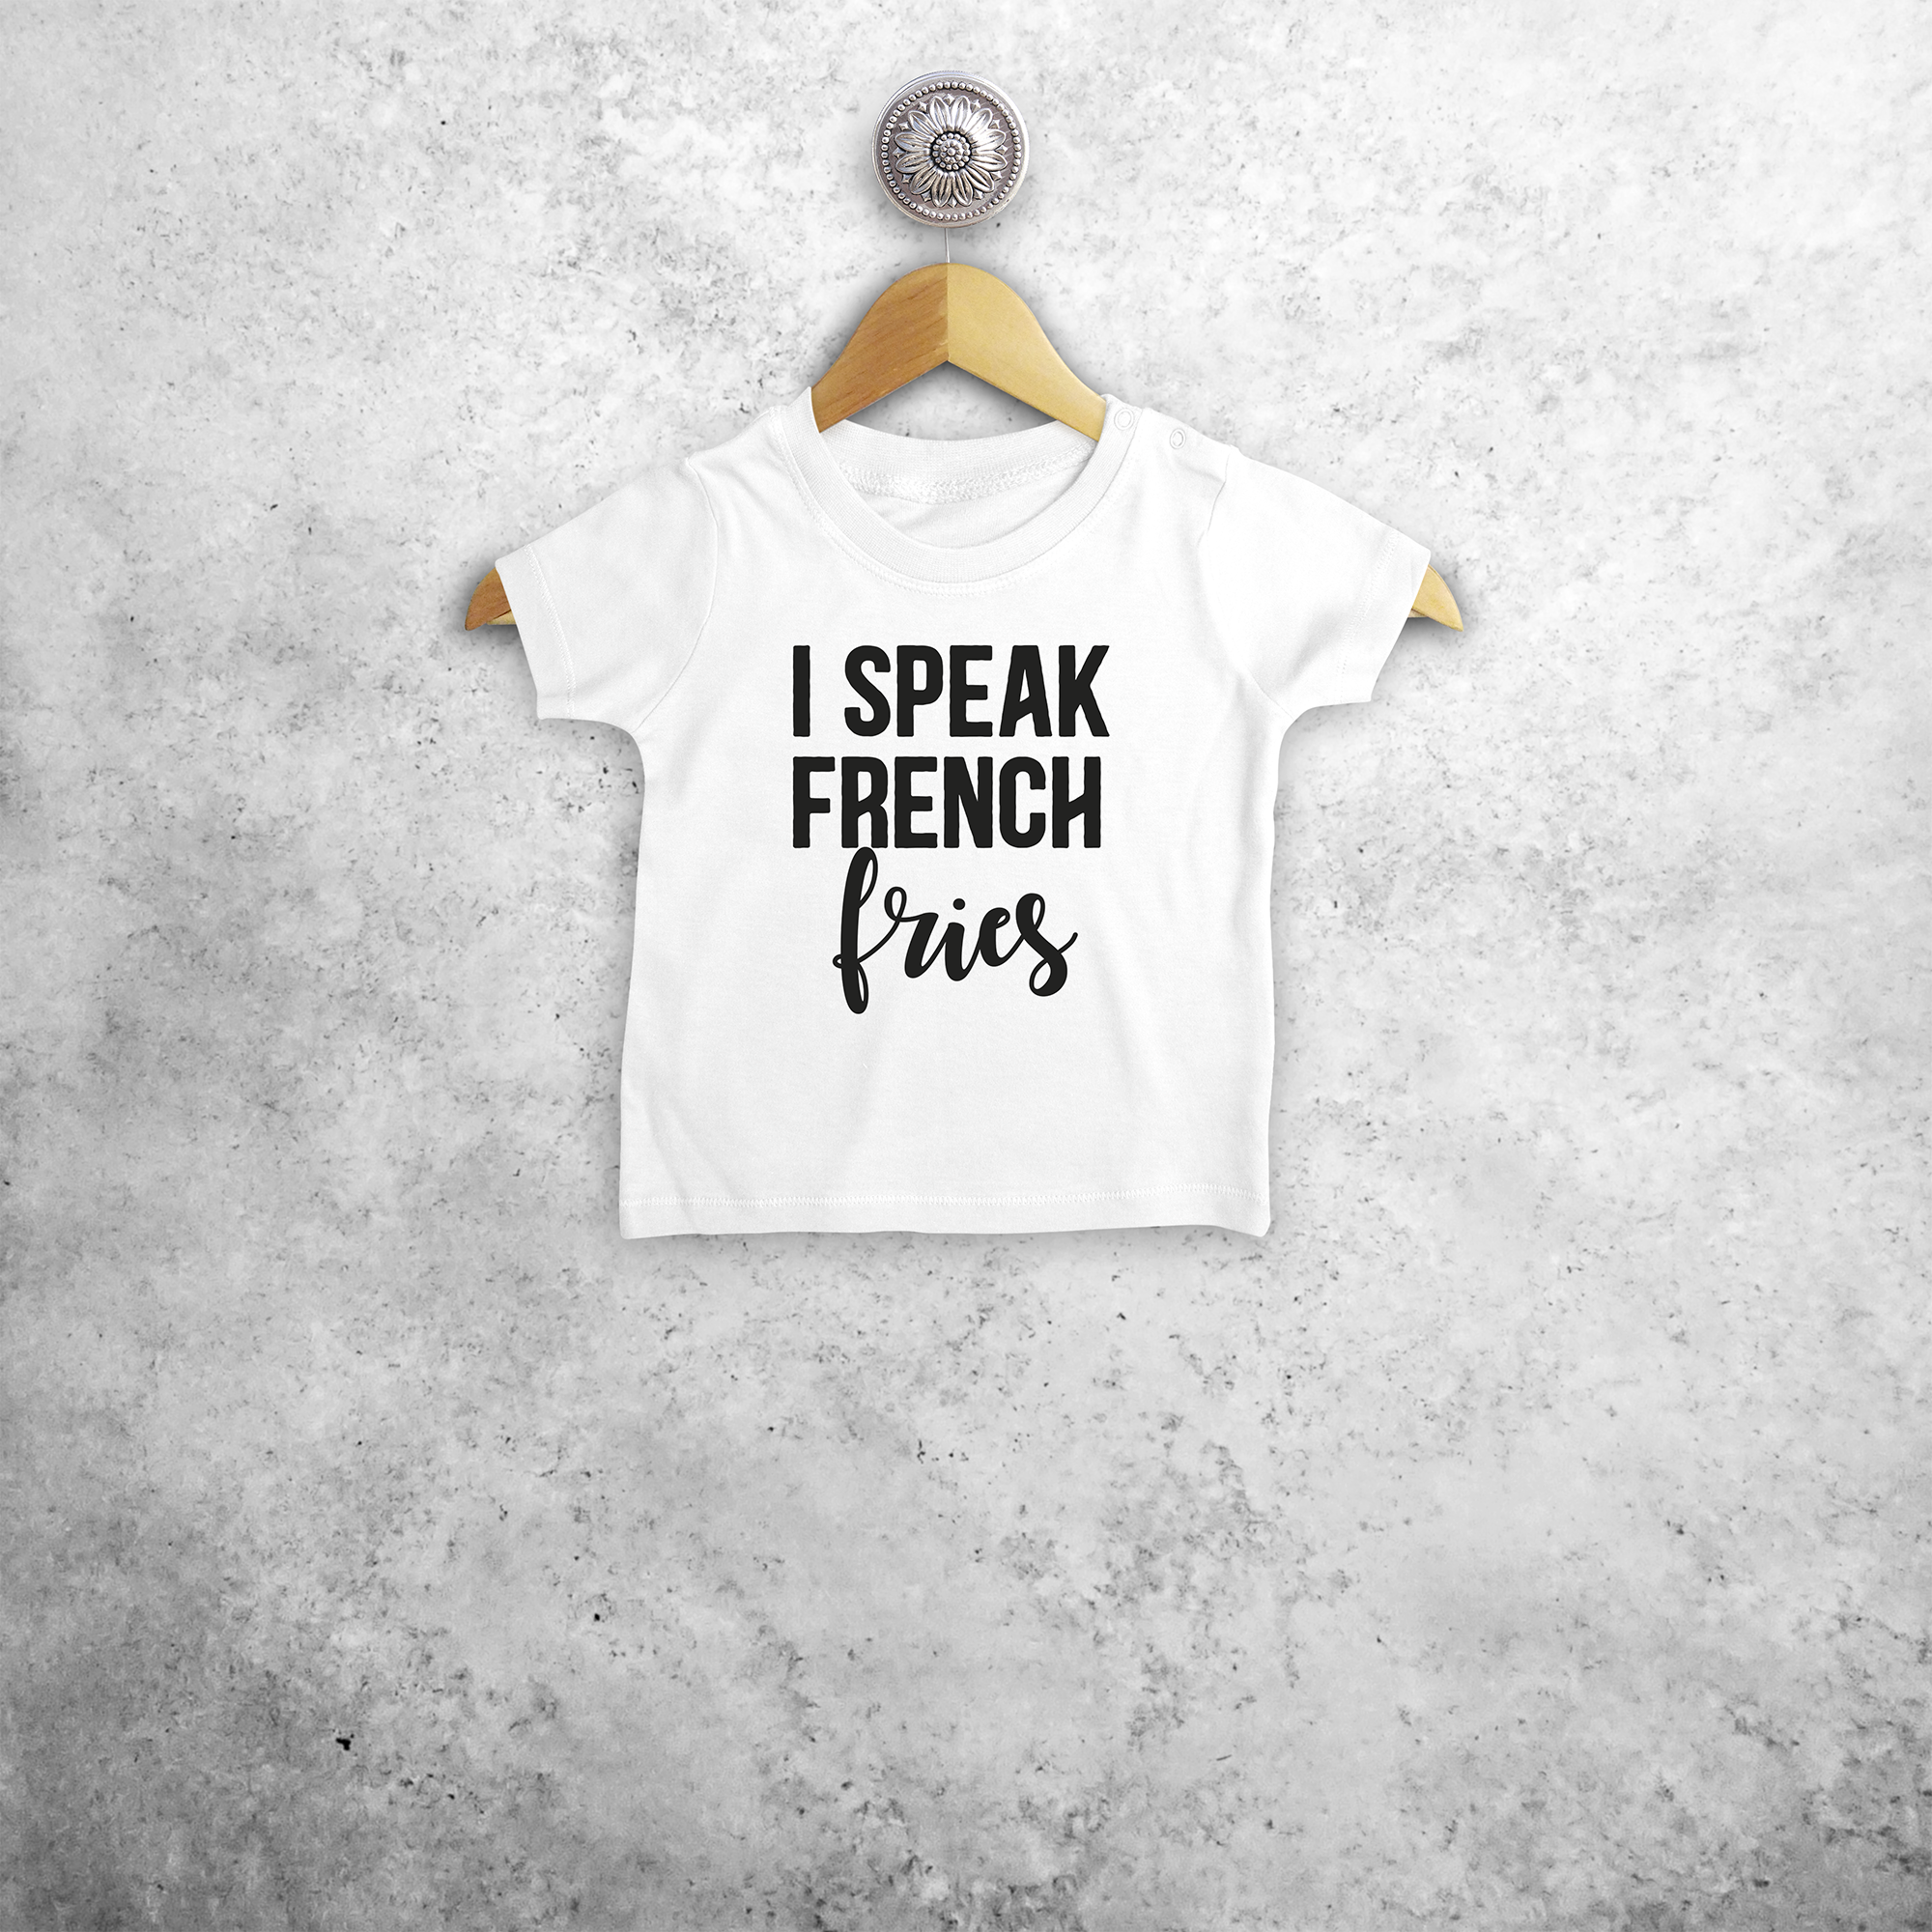 'I speak French fries' baby shirt met korte mouwen